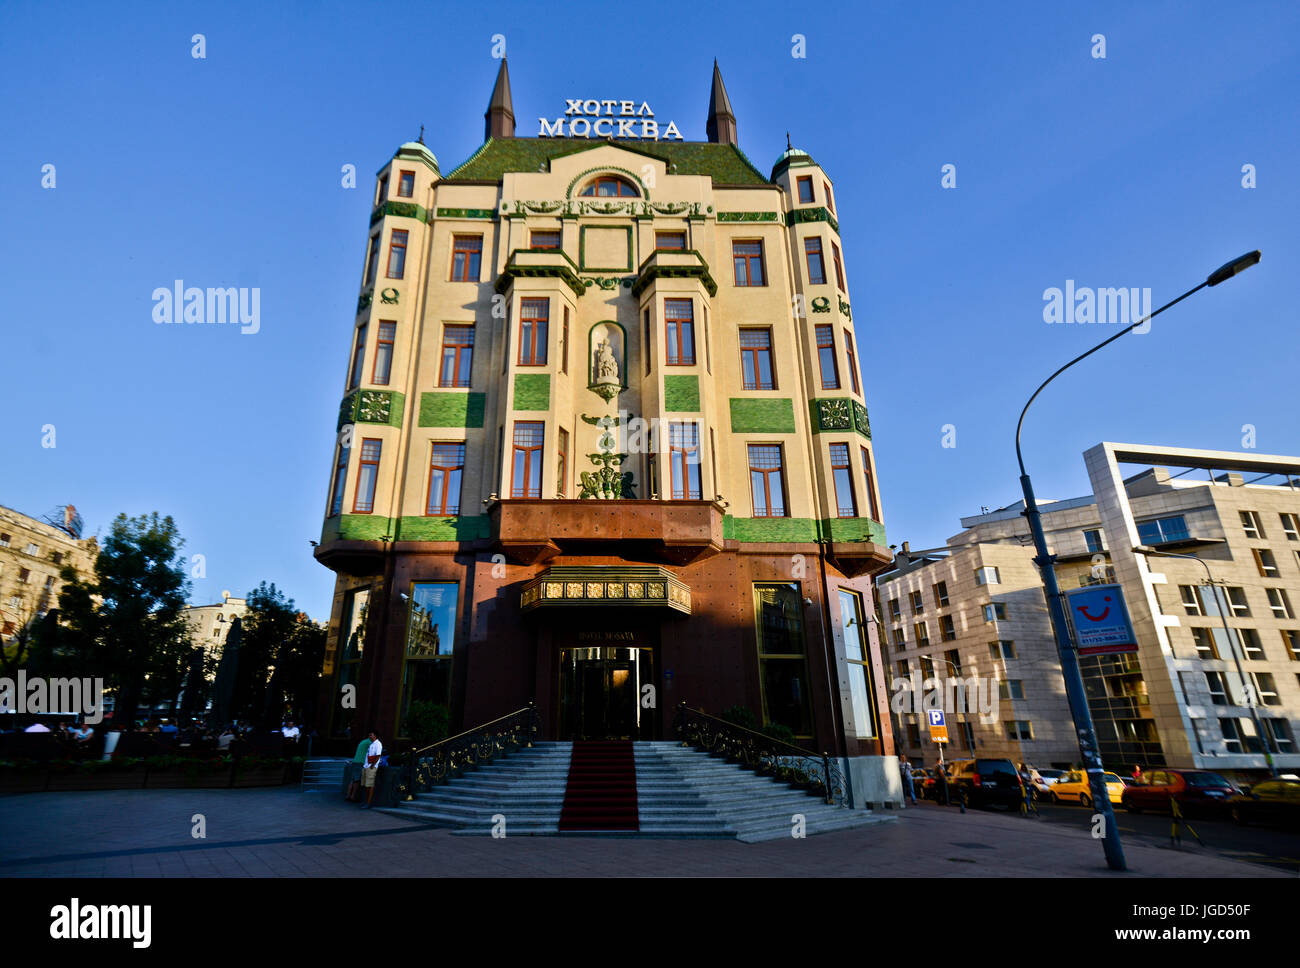 Moskva Hotel, Belgrade Stock Photo